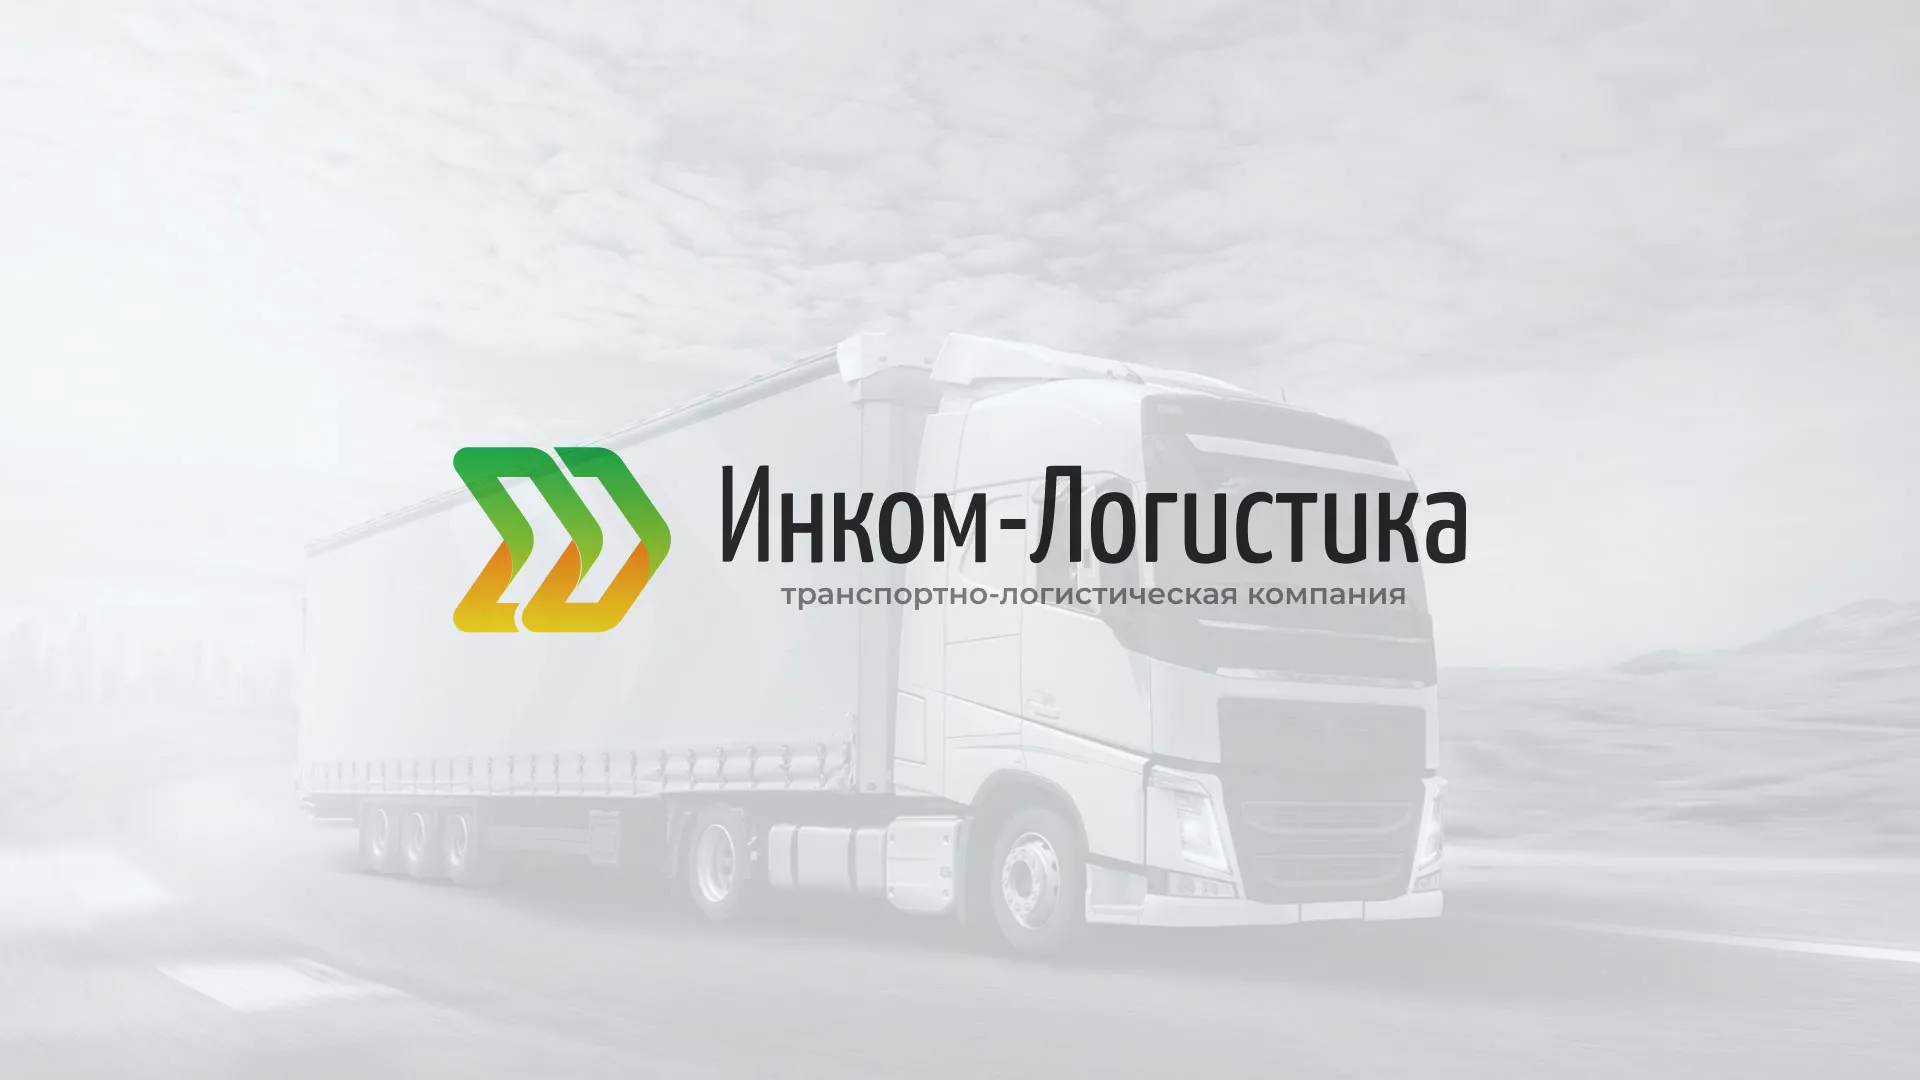 Разработка логотипа и сайта компании «Инком-Логистика» в Знаменске